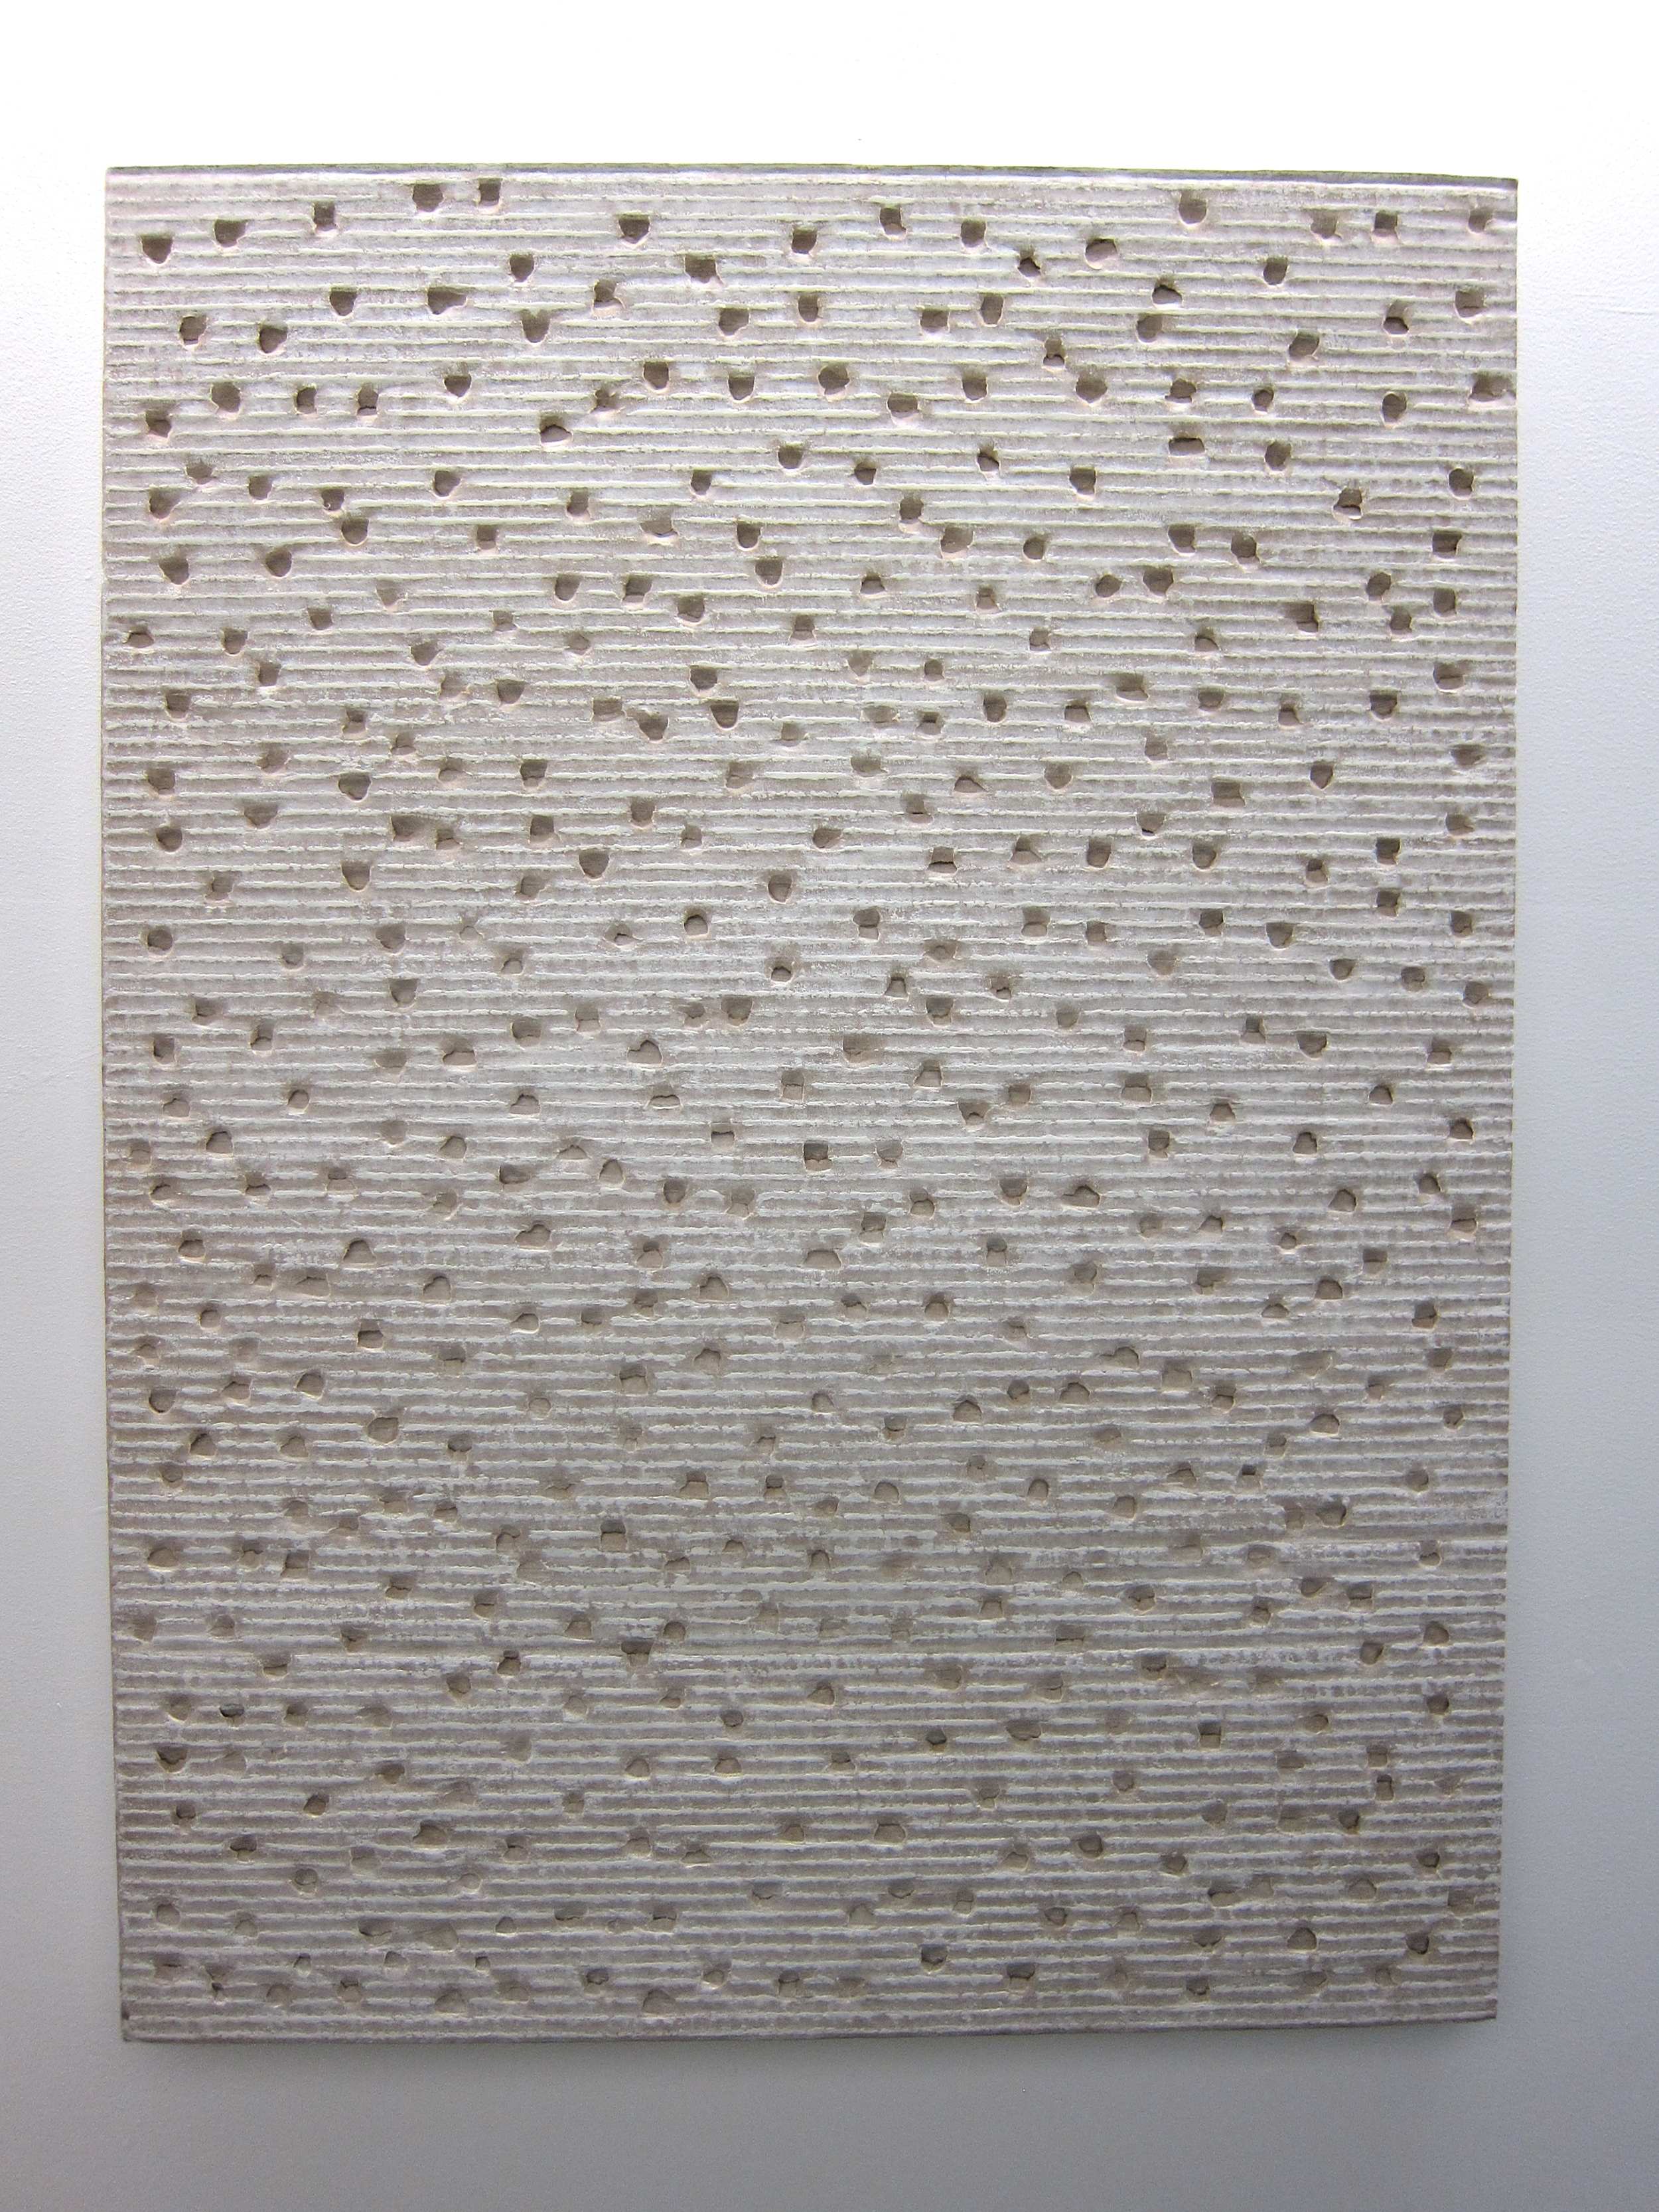  Tamiko Kawata Vertical Sound Cardboard and acrylic 39" x 40"   